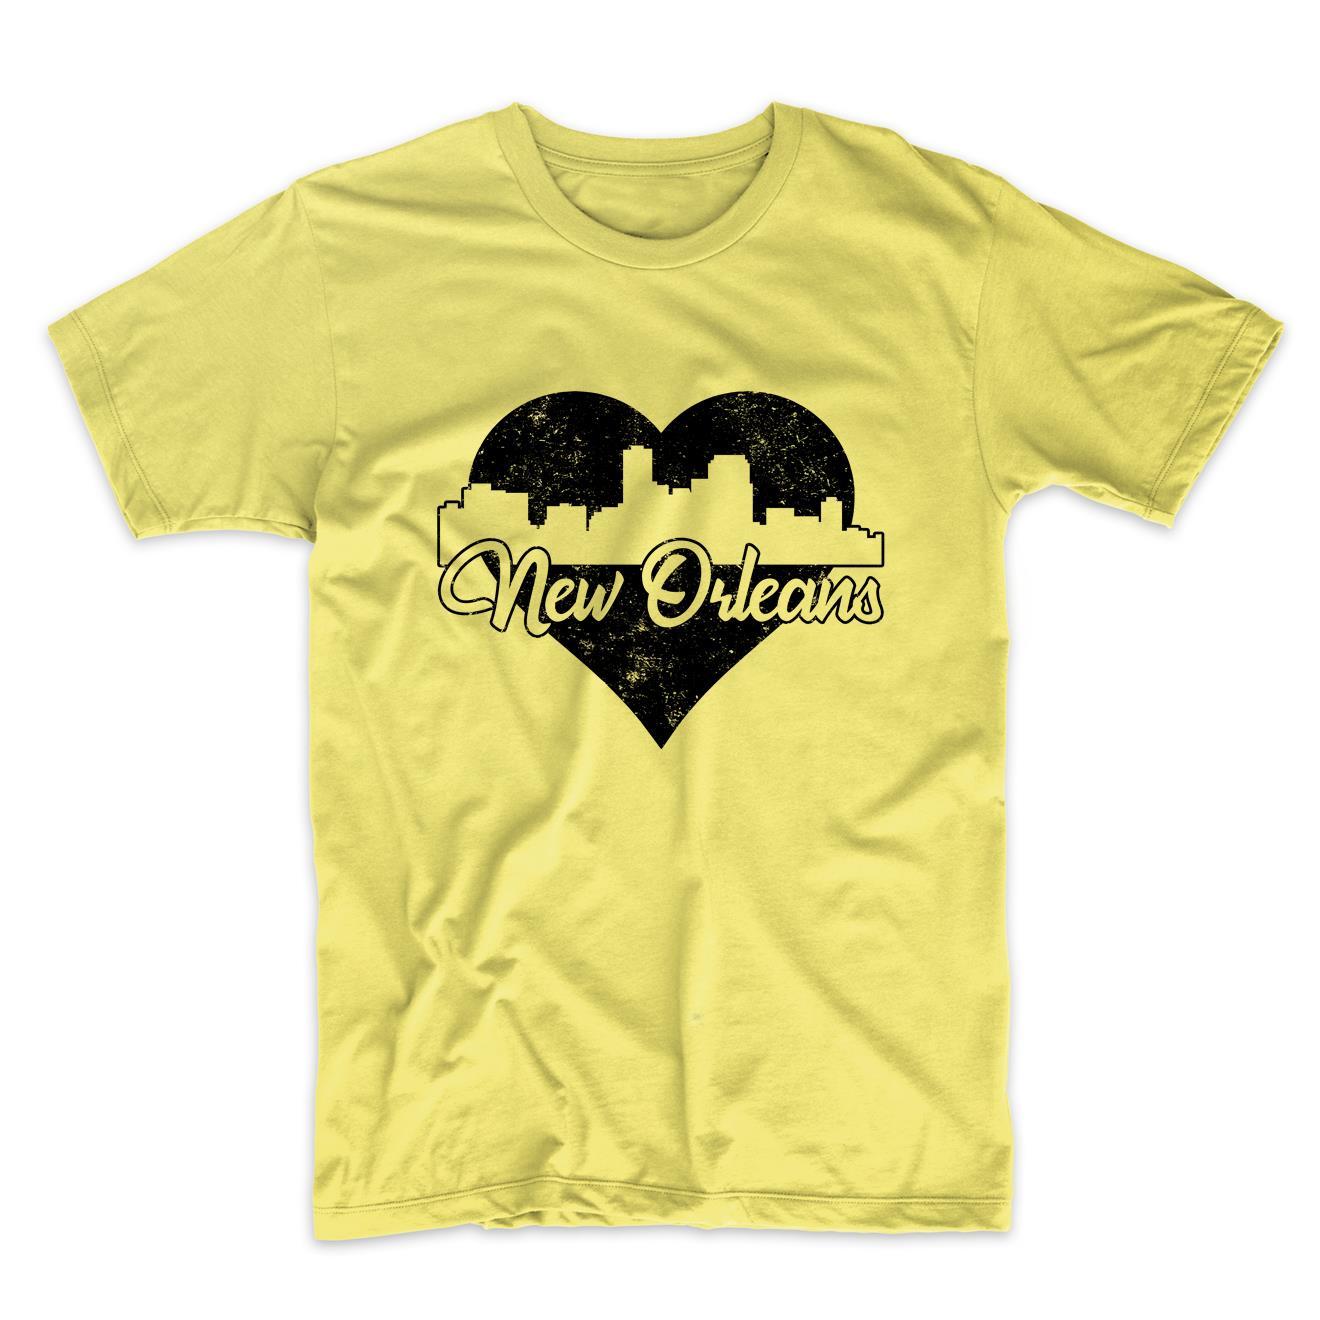 Retro New Orleans Louisiana Skyline Heart Distressed T-Shirt